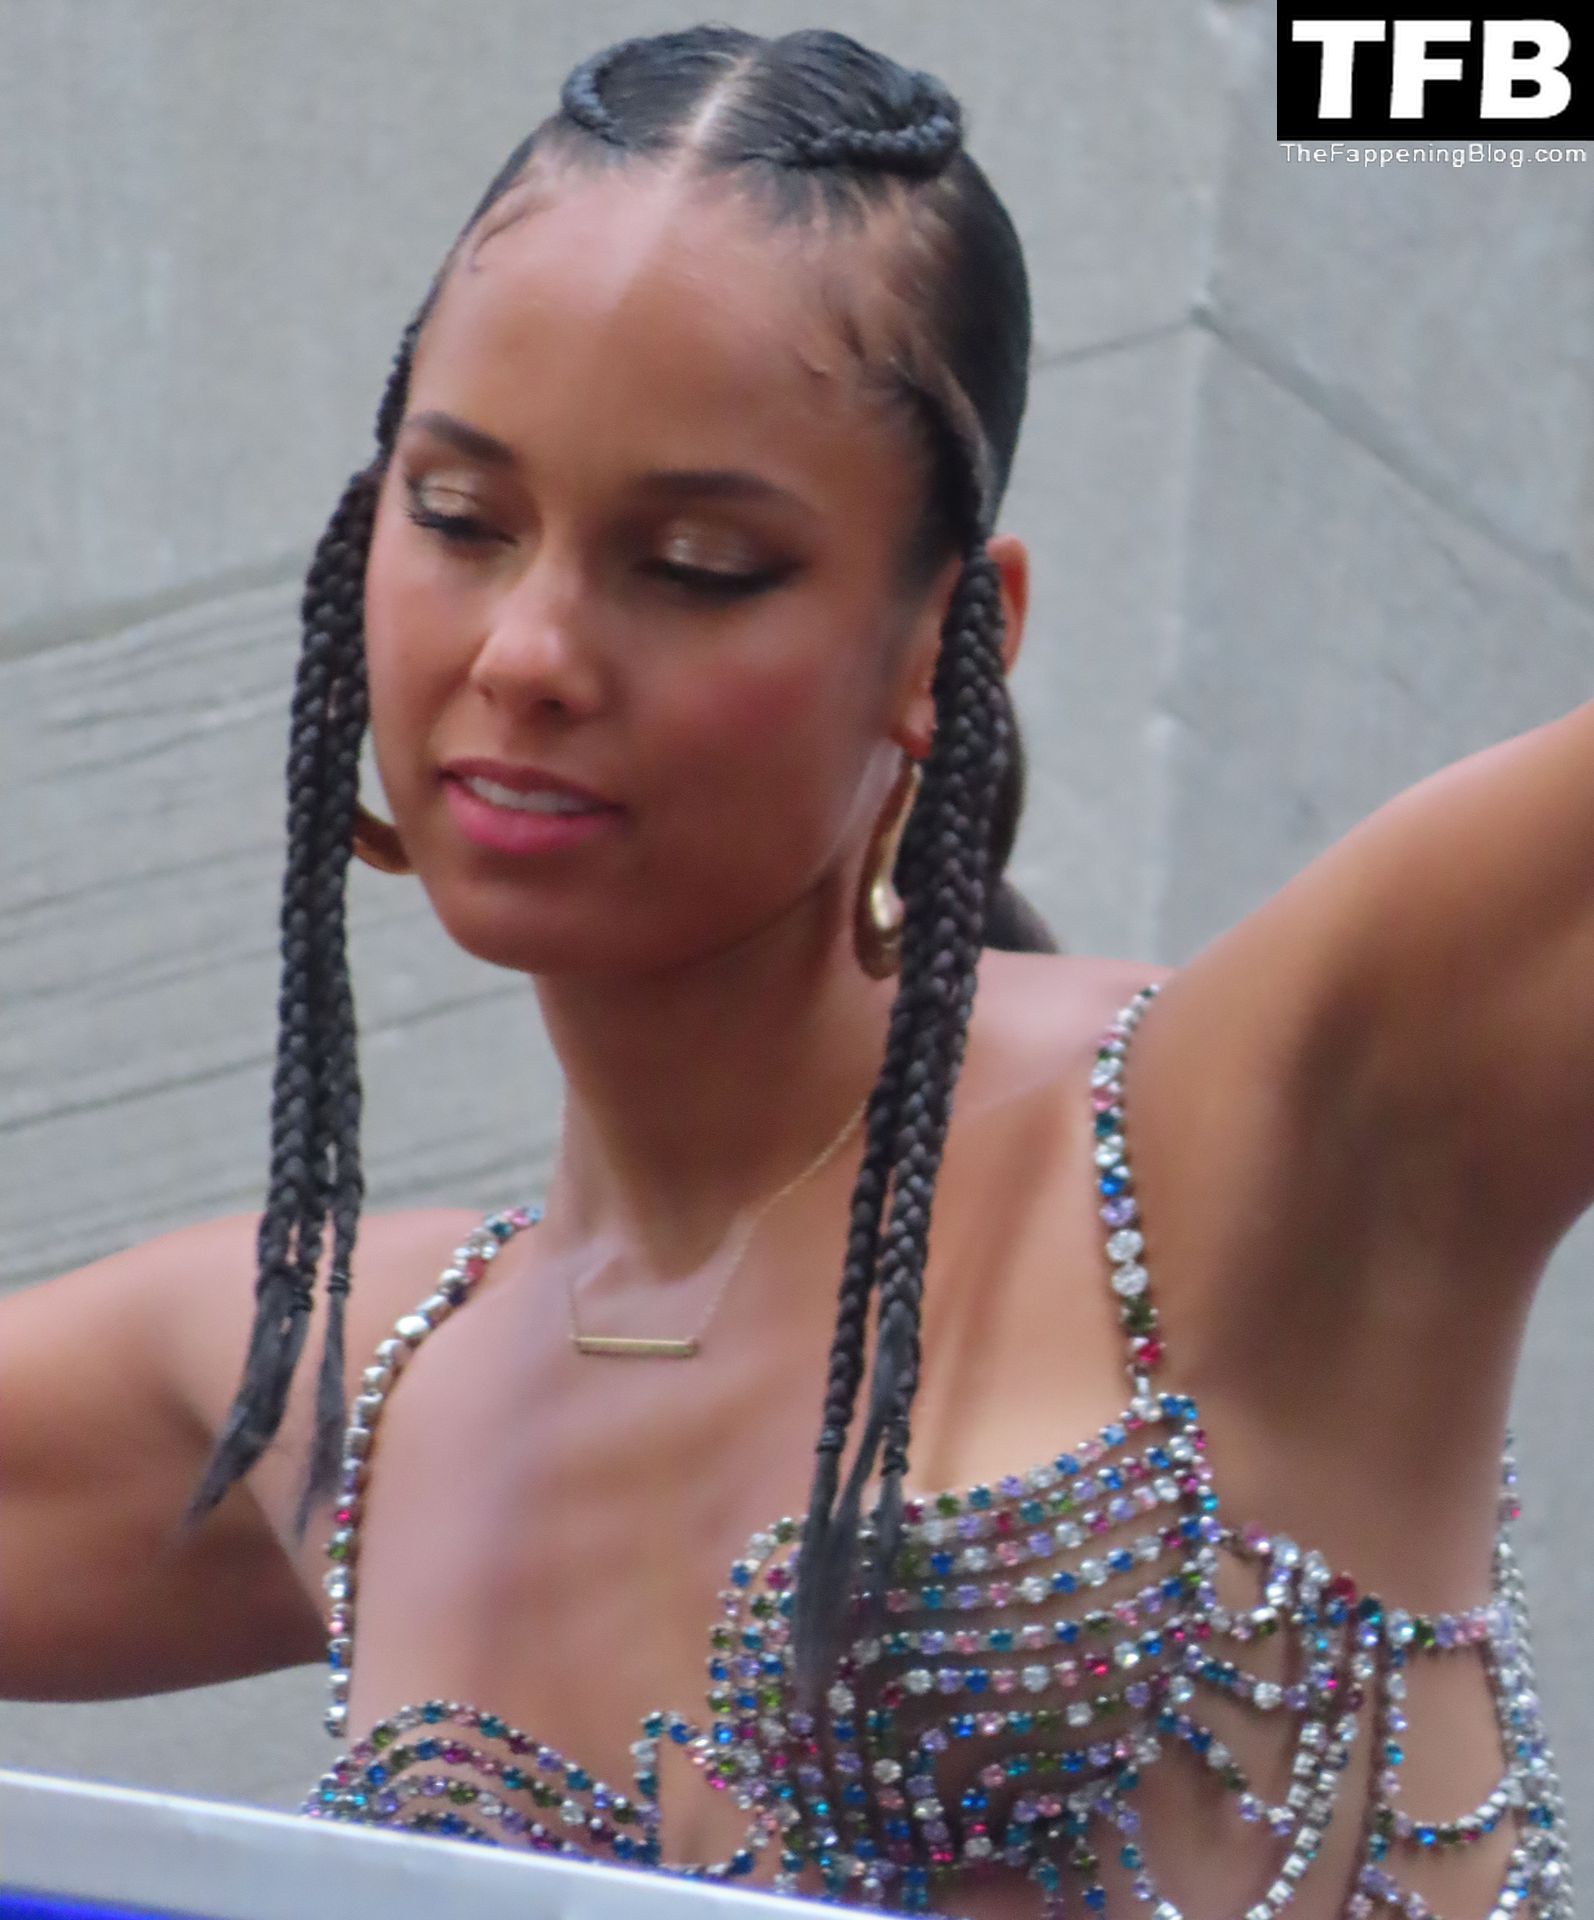 Alicia-Keys-Sexy-The-Fappening-Blog-21.jpg